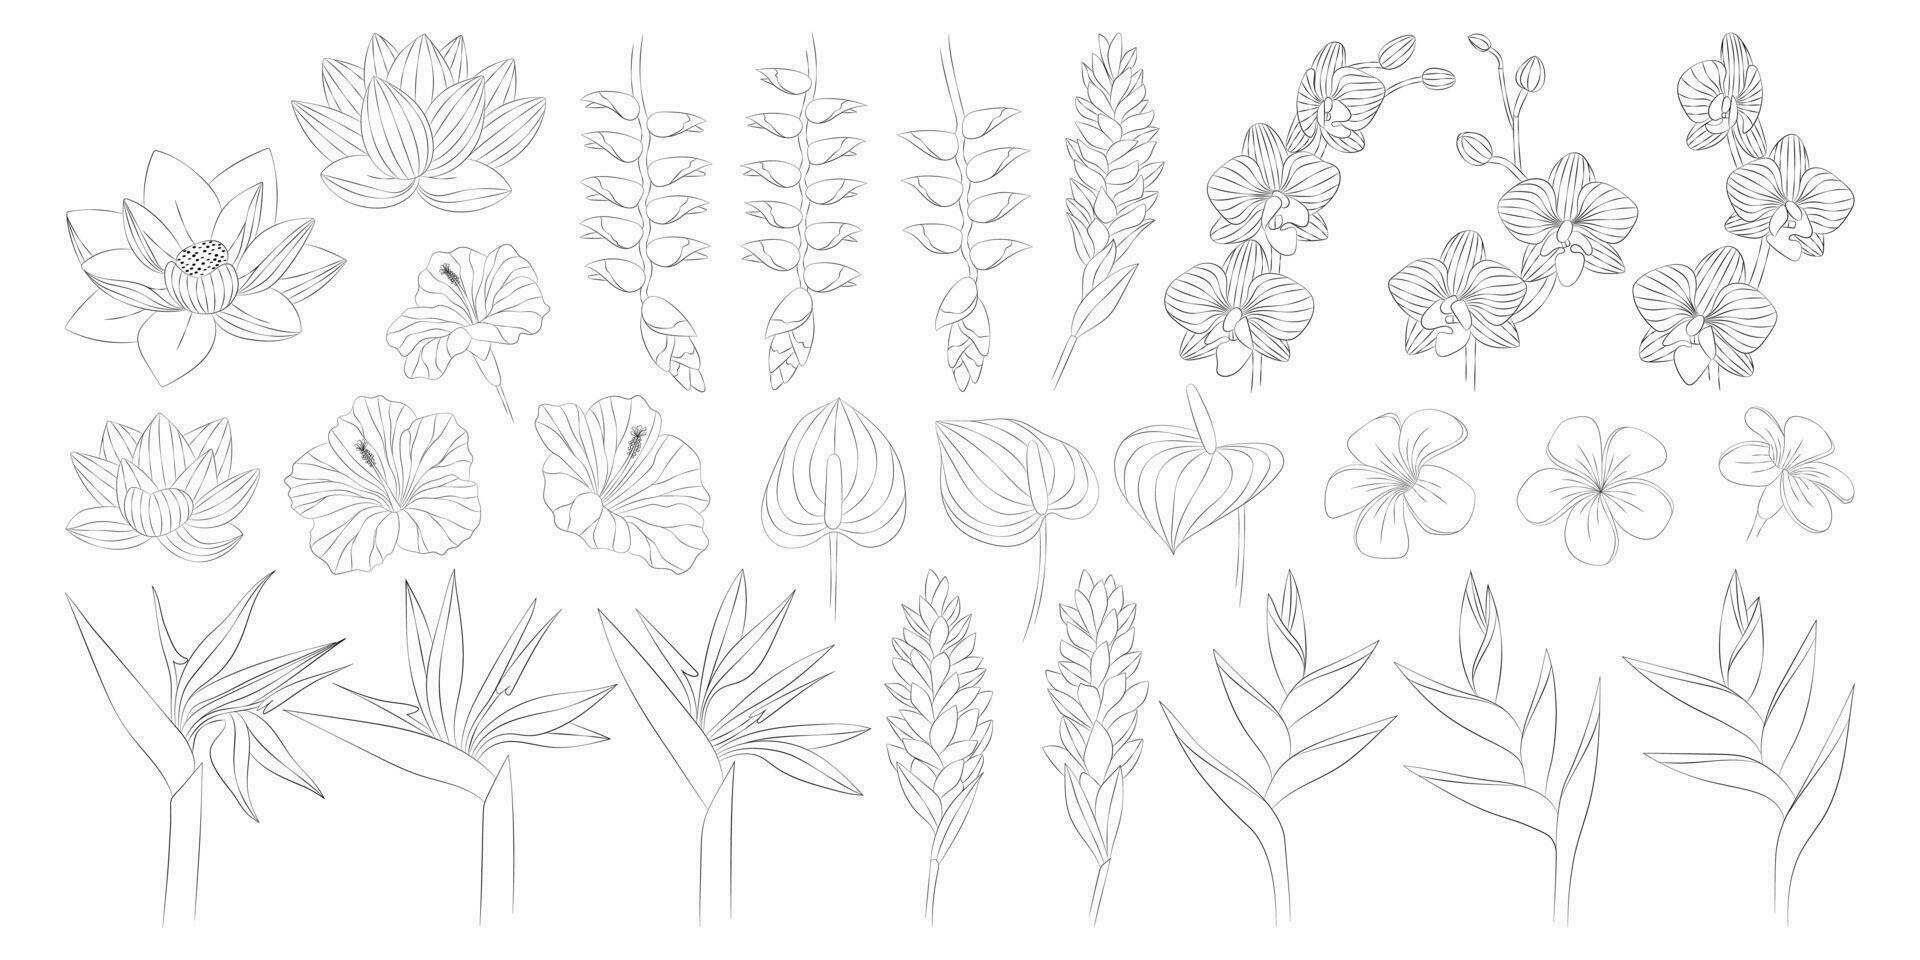 tropisch bloemen set. alpinia, anthurium, frangipani, lotus, heliconia, hibiscus, orchidee, strelitzia. vector botanisch illustratie, contour grafisch tekening.